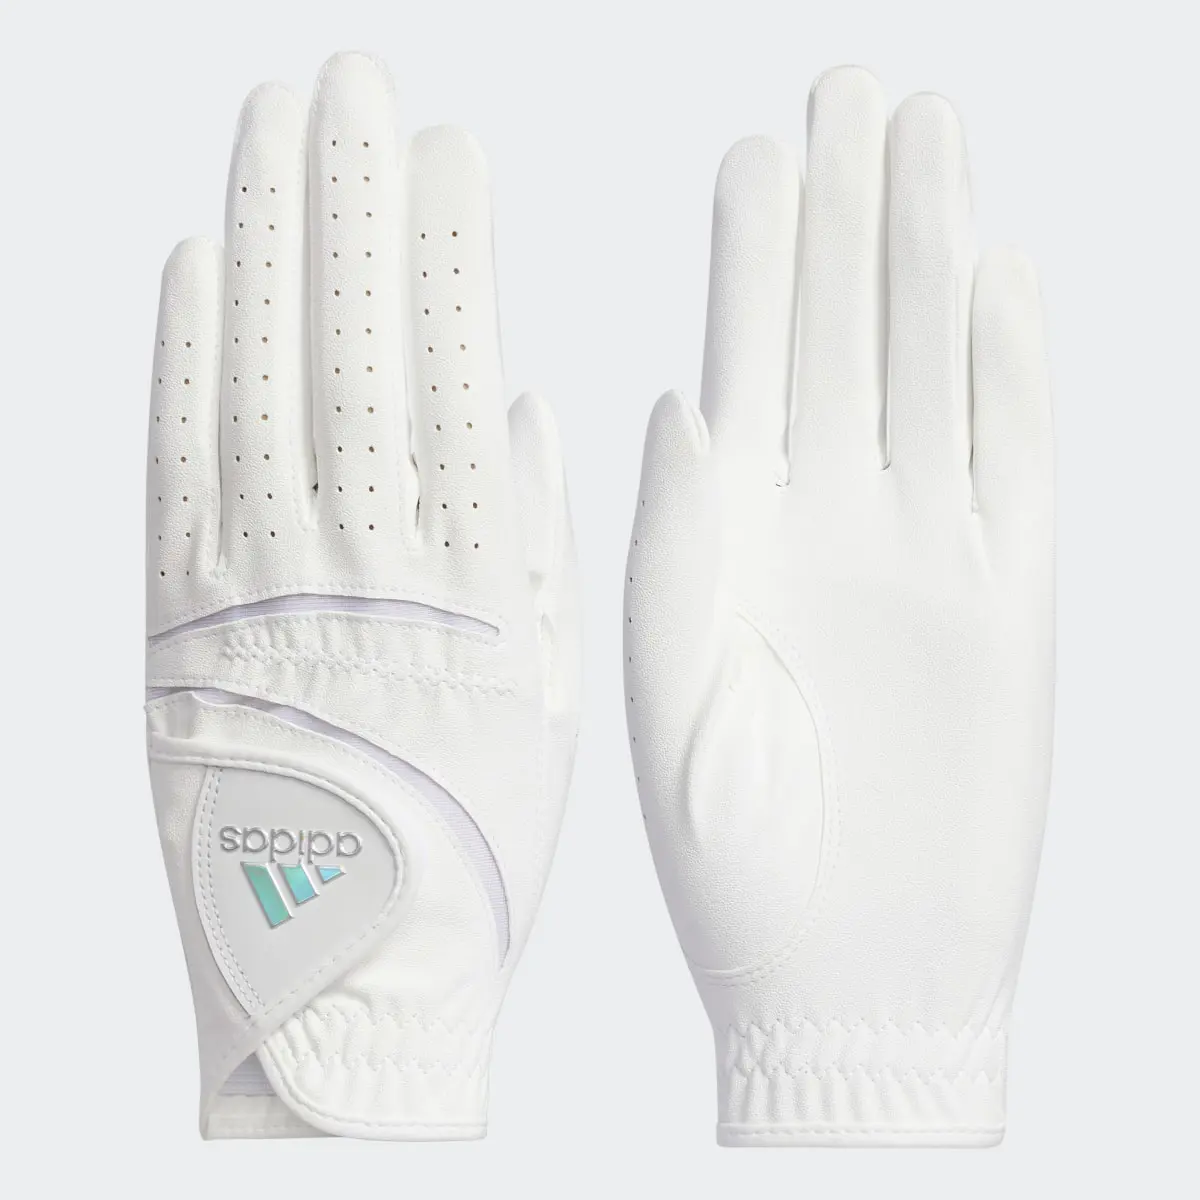 Adidas Light and Comfort Glove. 1